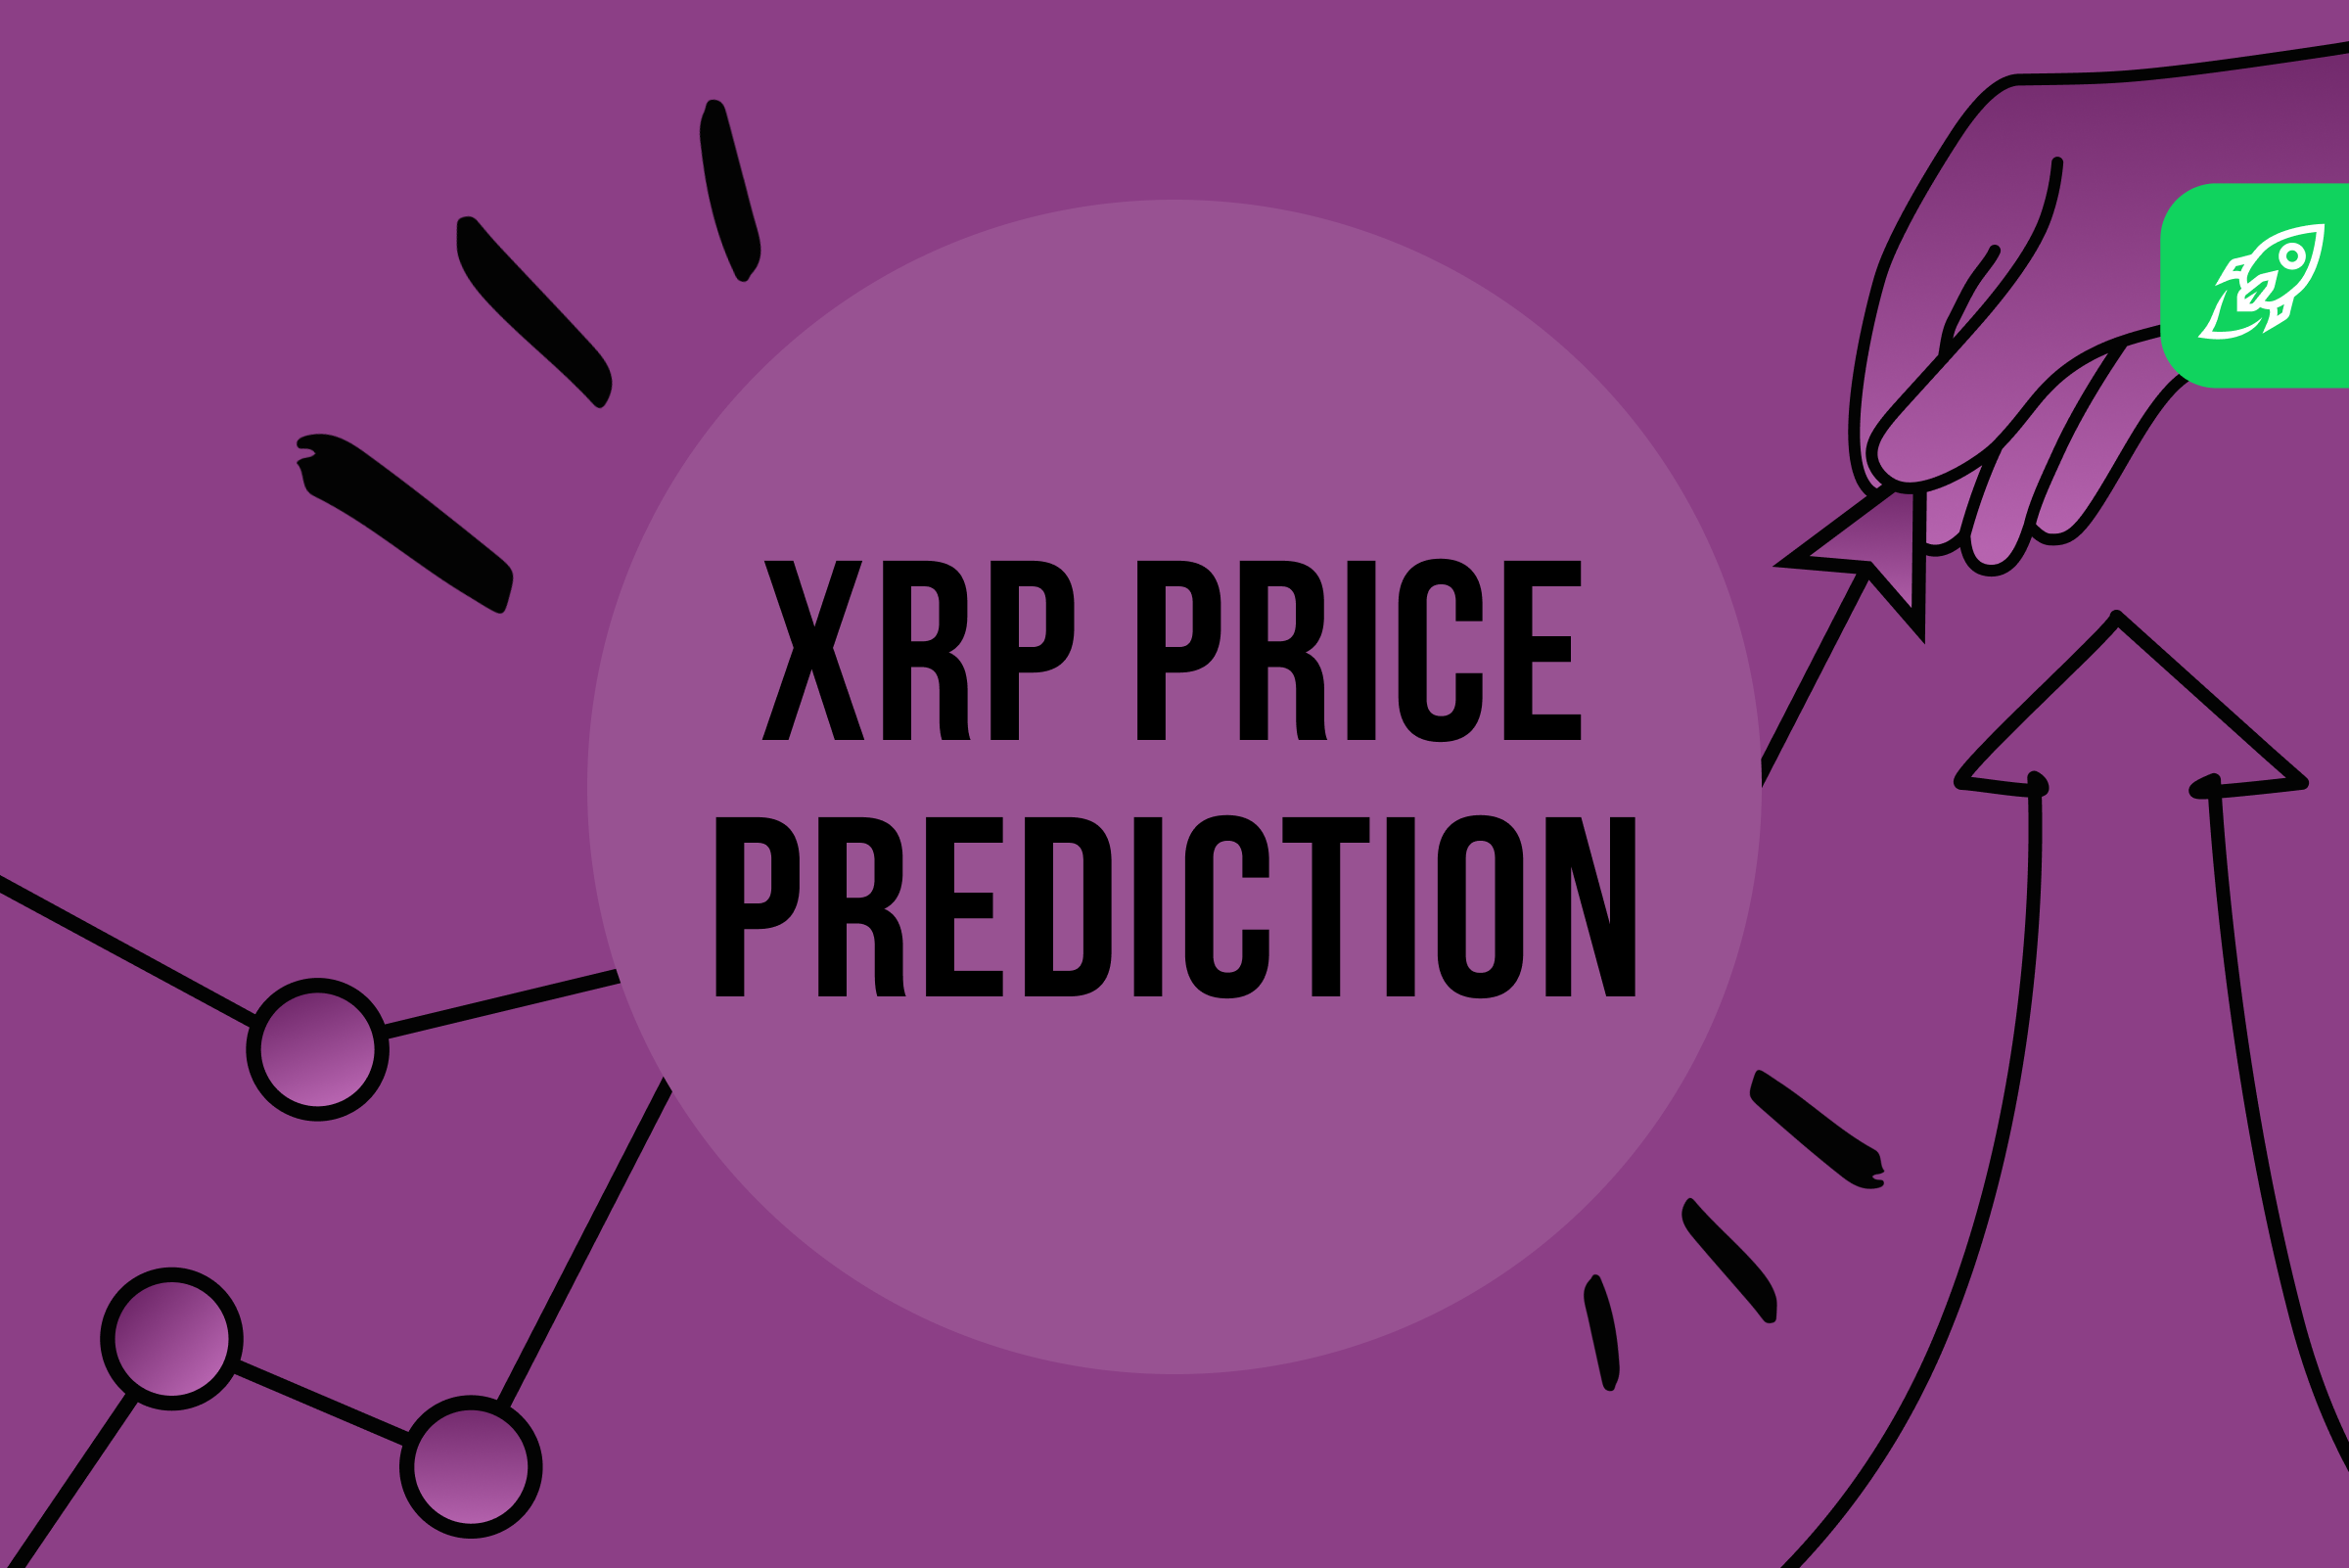 Ripple,RippleNet (XRP) Price, Chart & News | Crypto prices & trends on MEXC